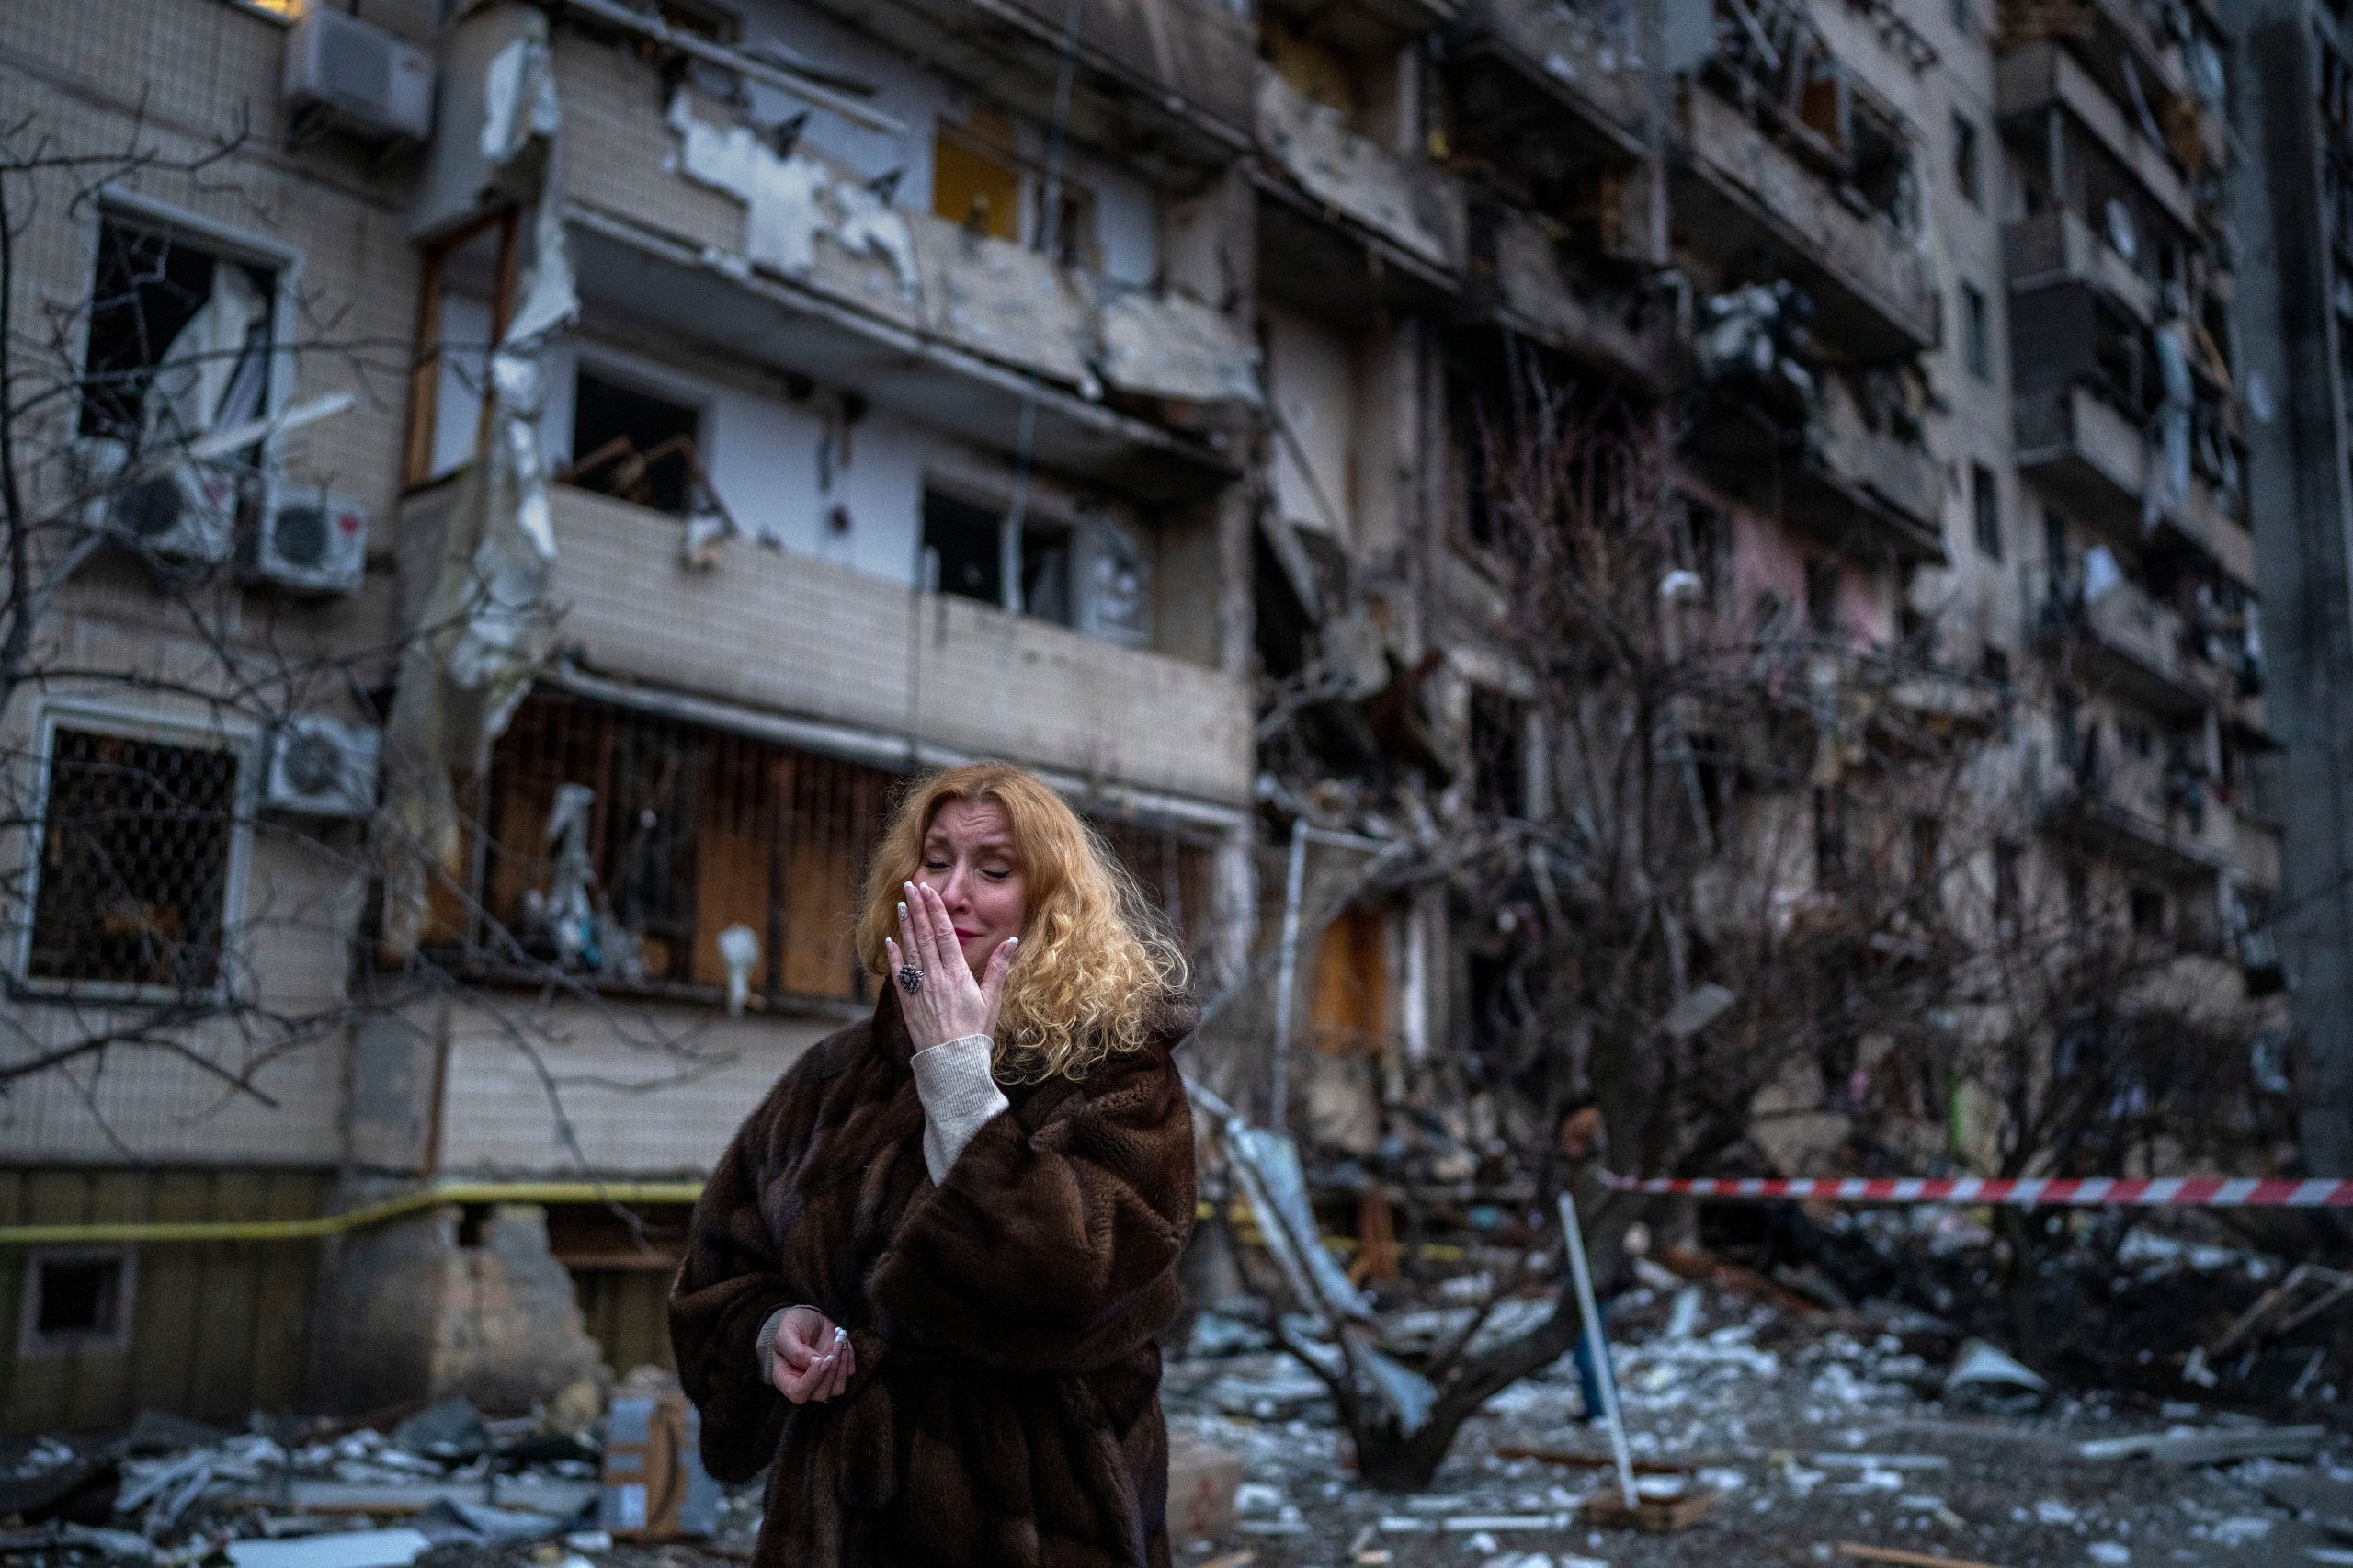 Russia-Ukraine crisis: Battle underway in eastern suburb of Kyiv